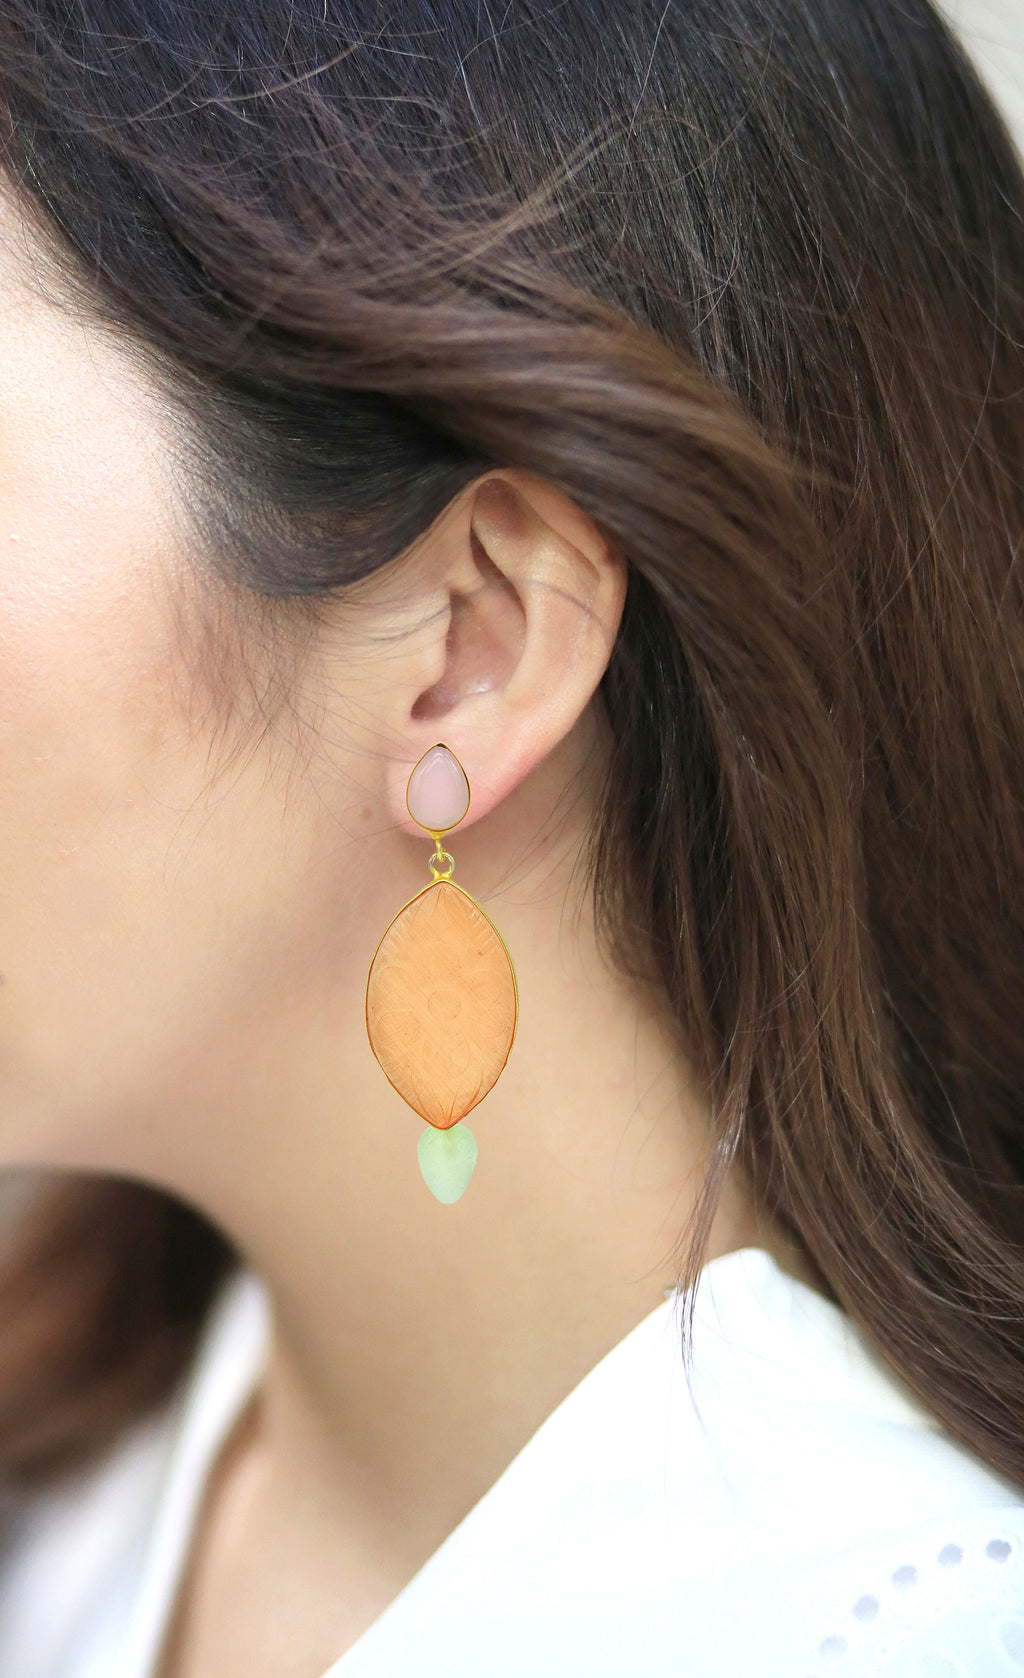 Oval Tangerine Earrings - Statement Earrings - Gold-Plated & Hypoallergenic - Made in India - Dubai Jewellery - Dori